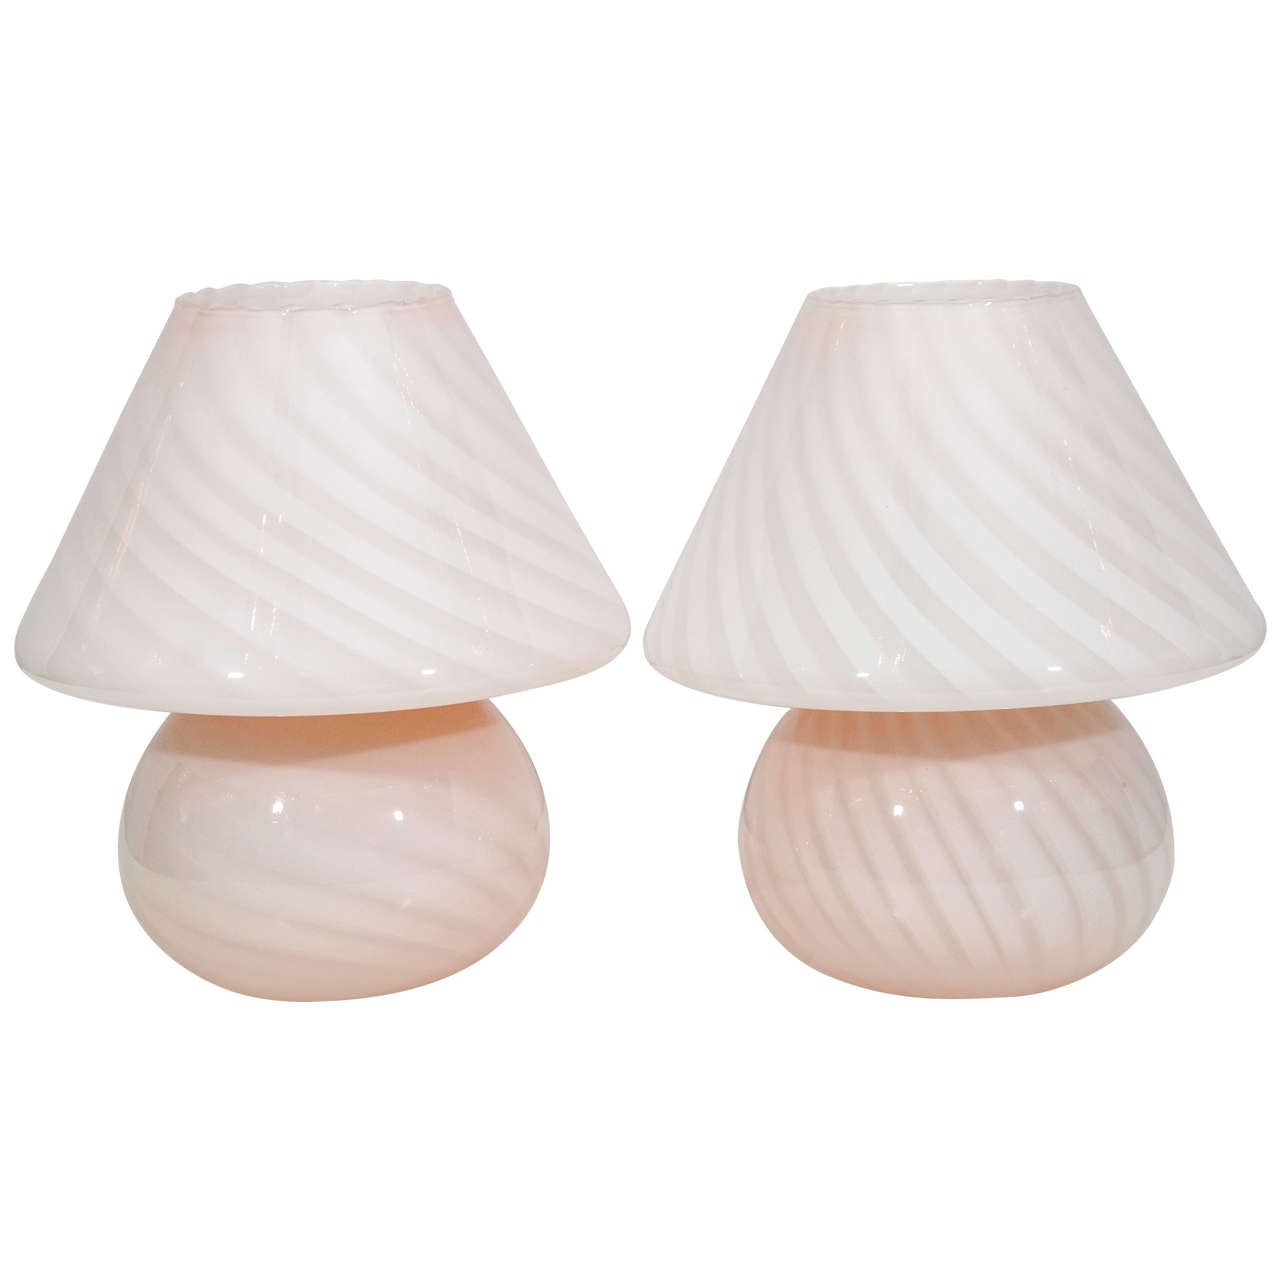 Pair of Charming Murano Lamps